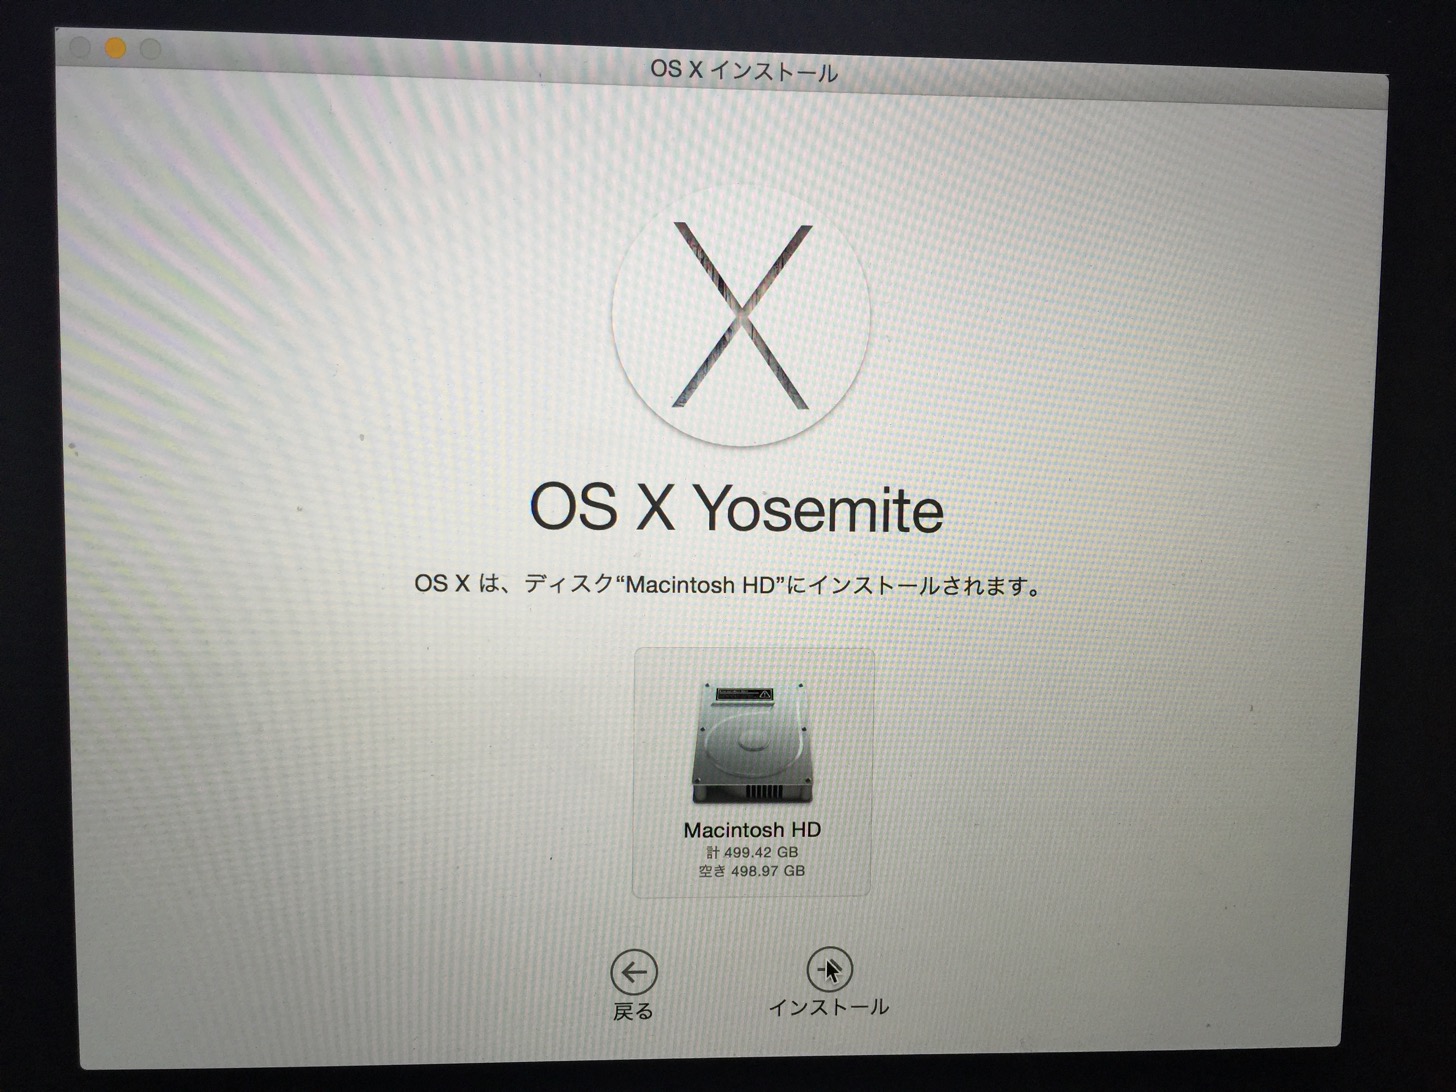 OS X Yosemite。OS Xはディスク、Macintosh HDにインストールされます。